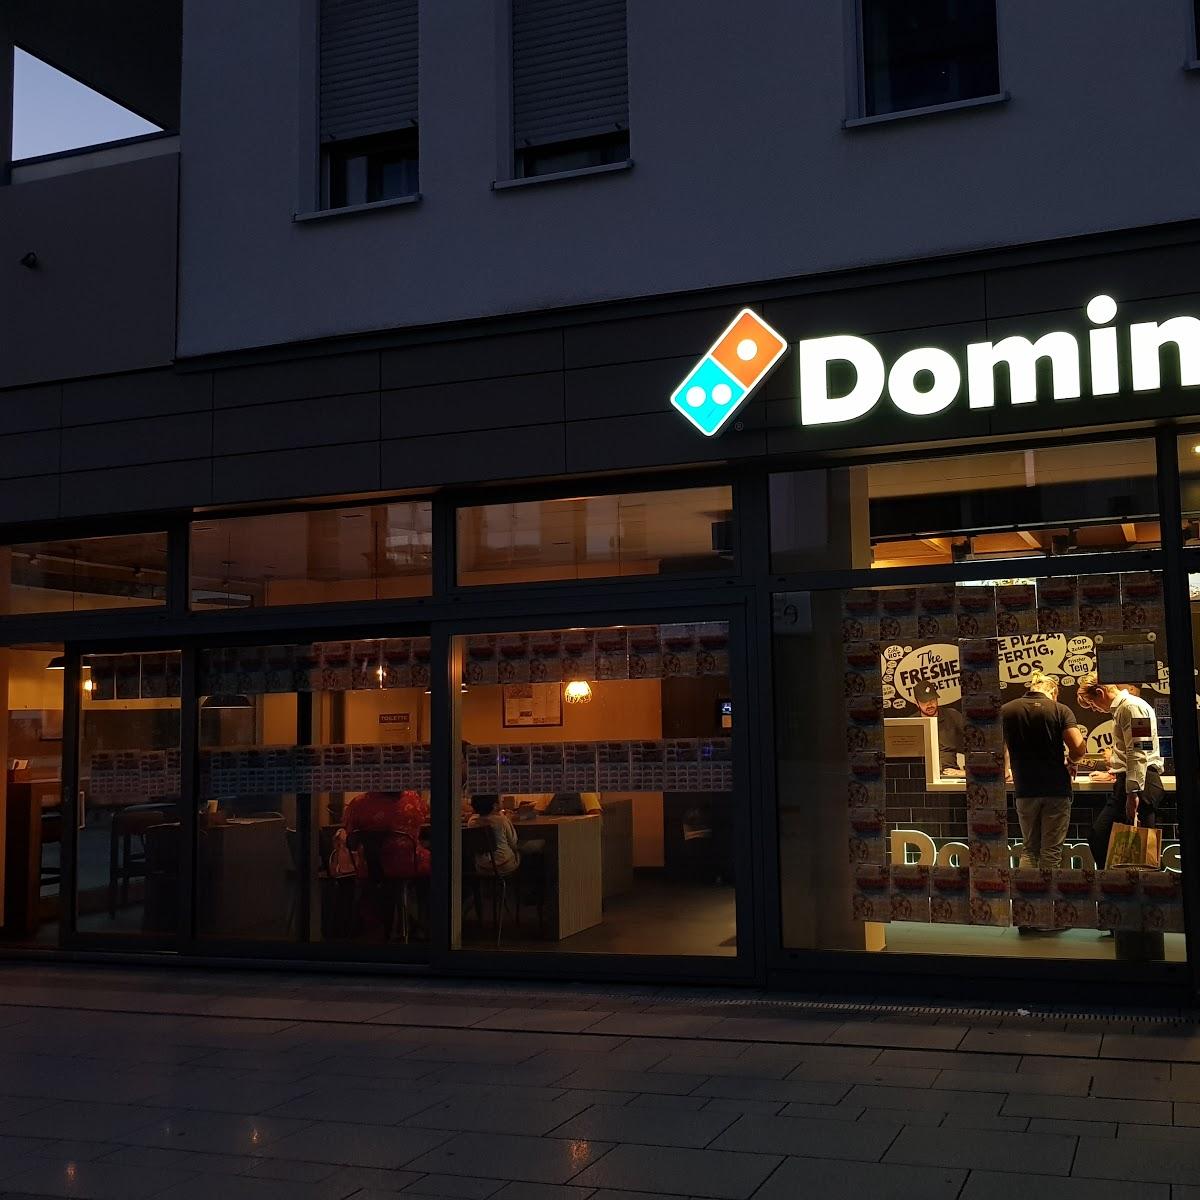 Restaurant "Domino